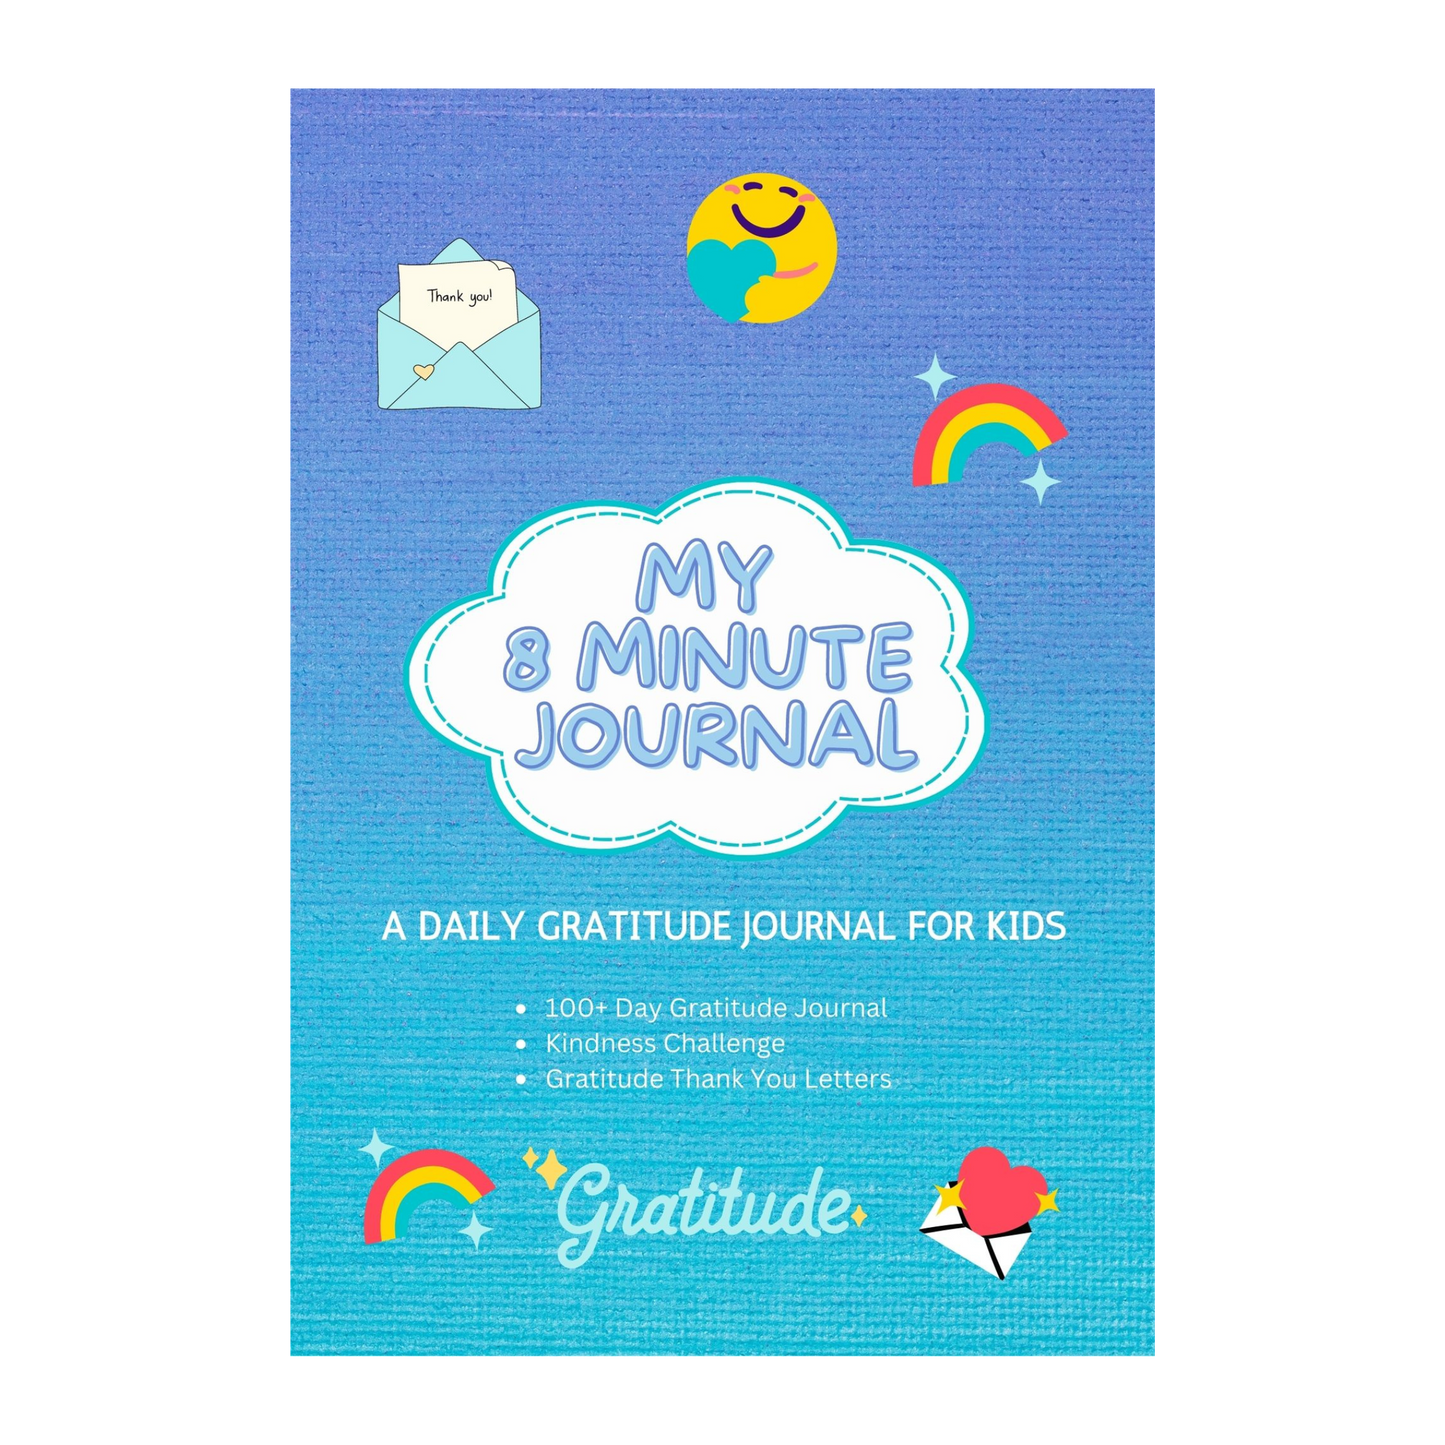 8 Minute Gratitude Journal